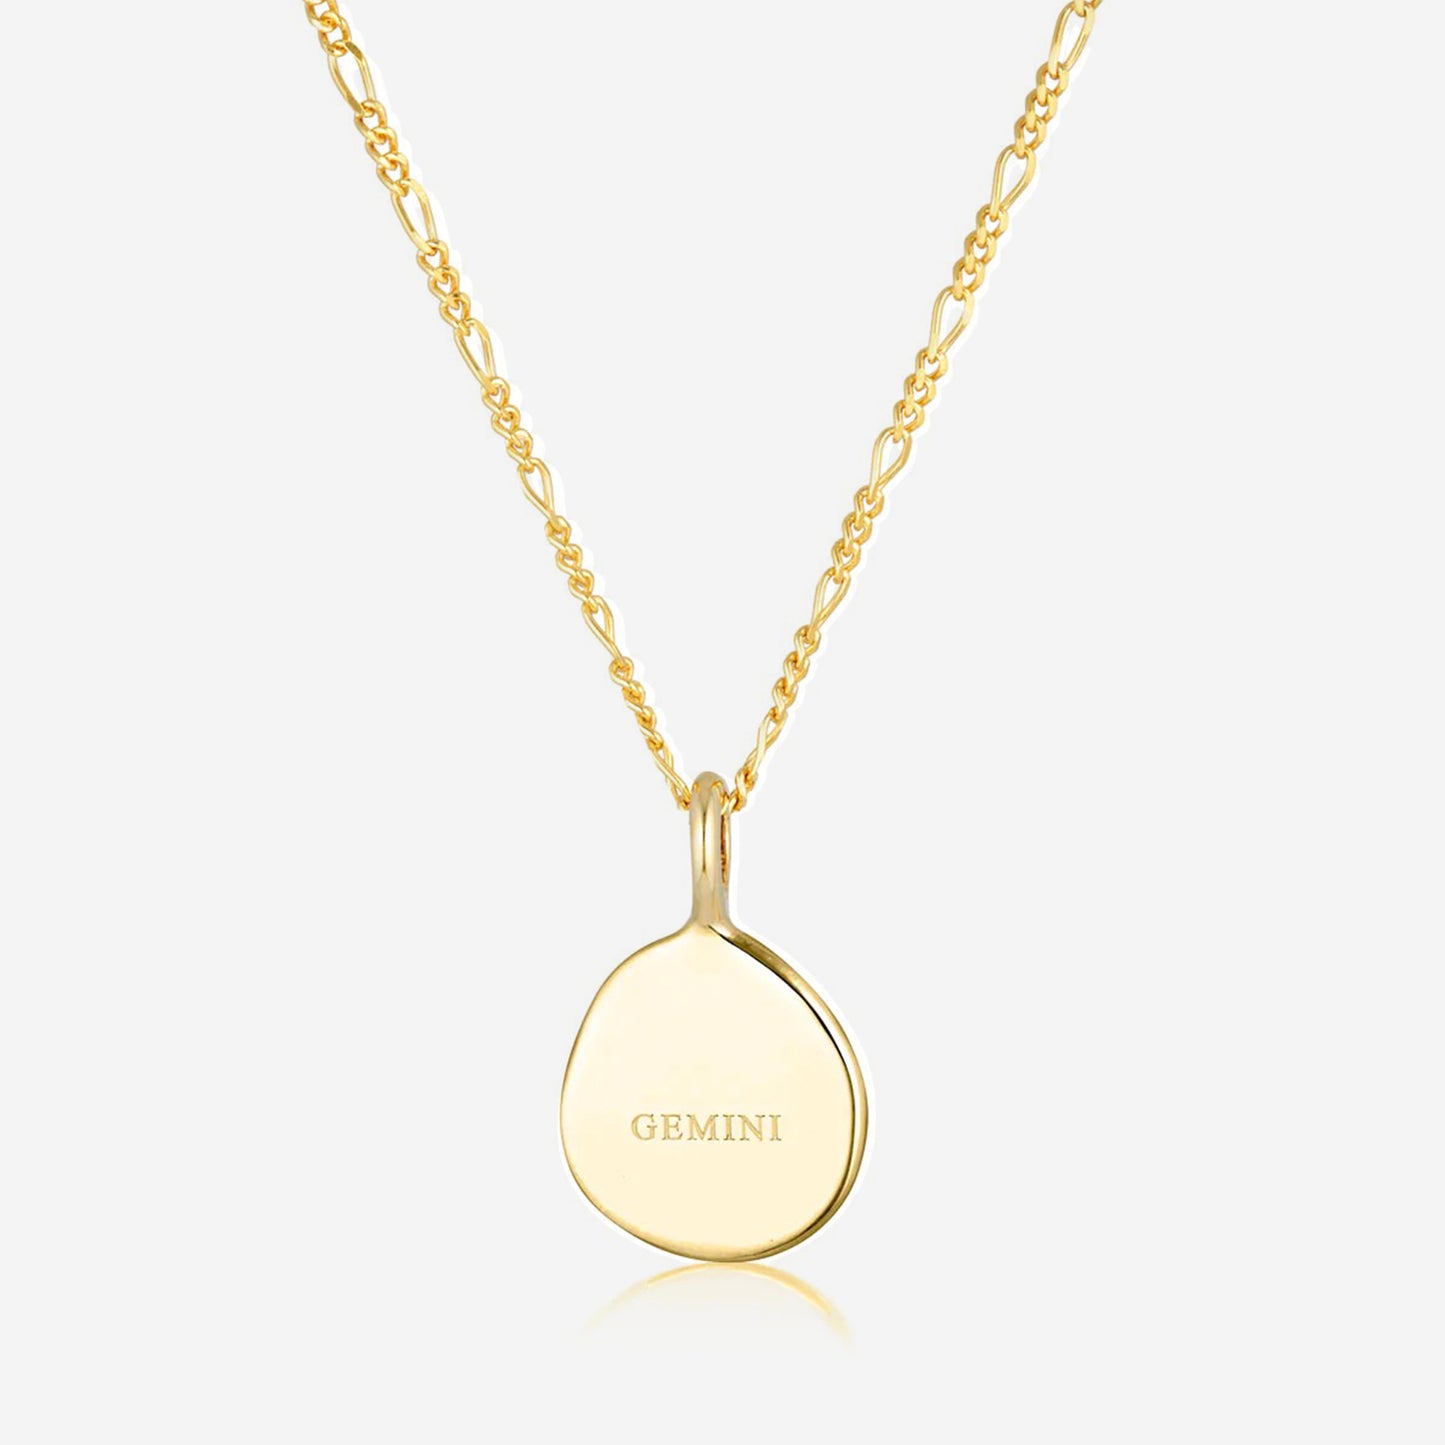 Linda Tahija - Zodiac Cable Necklace - Gemini - Gold Plated